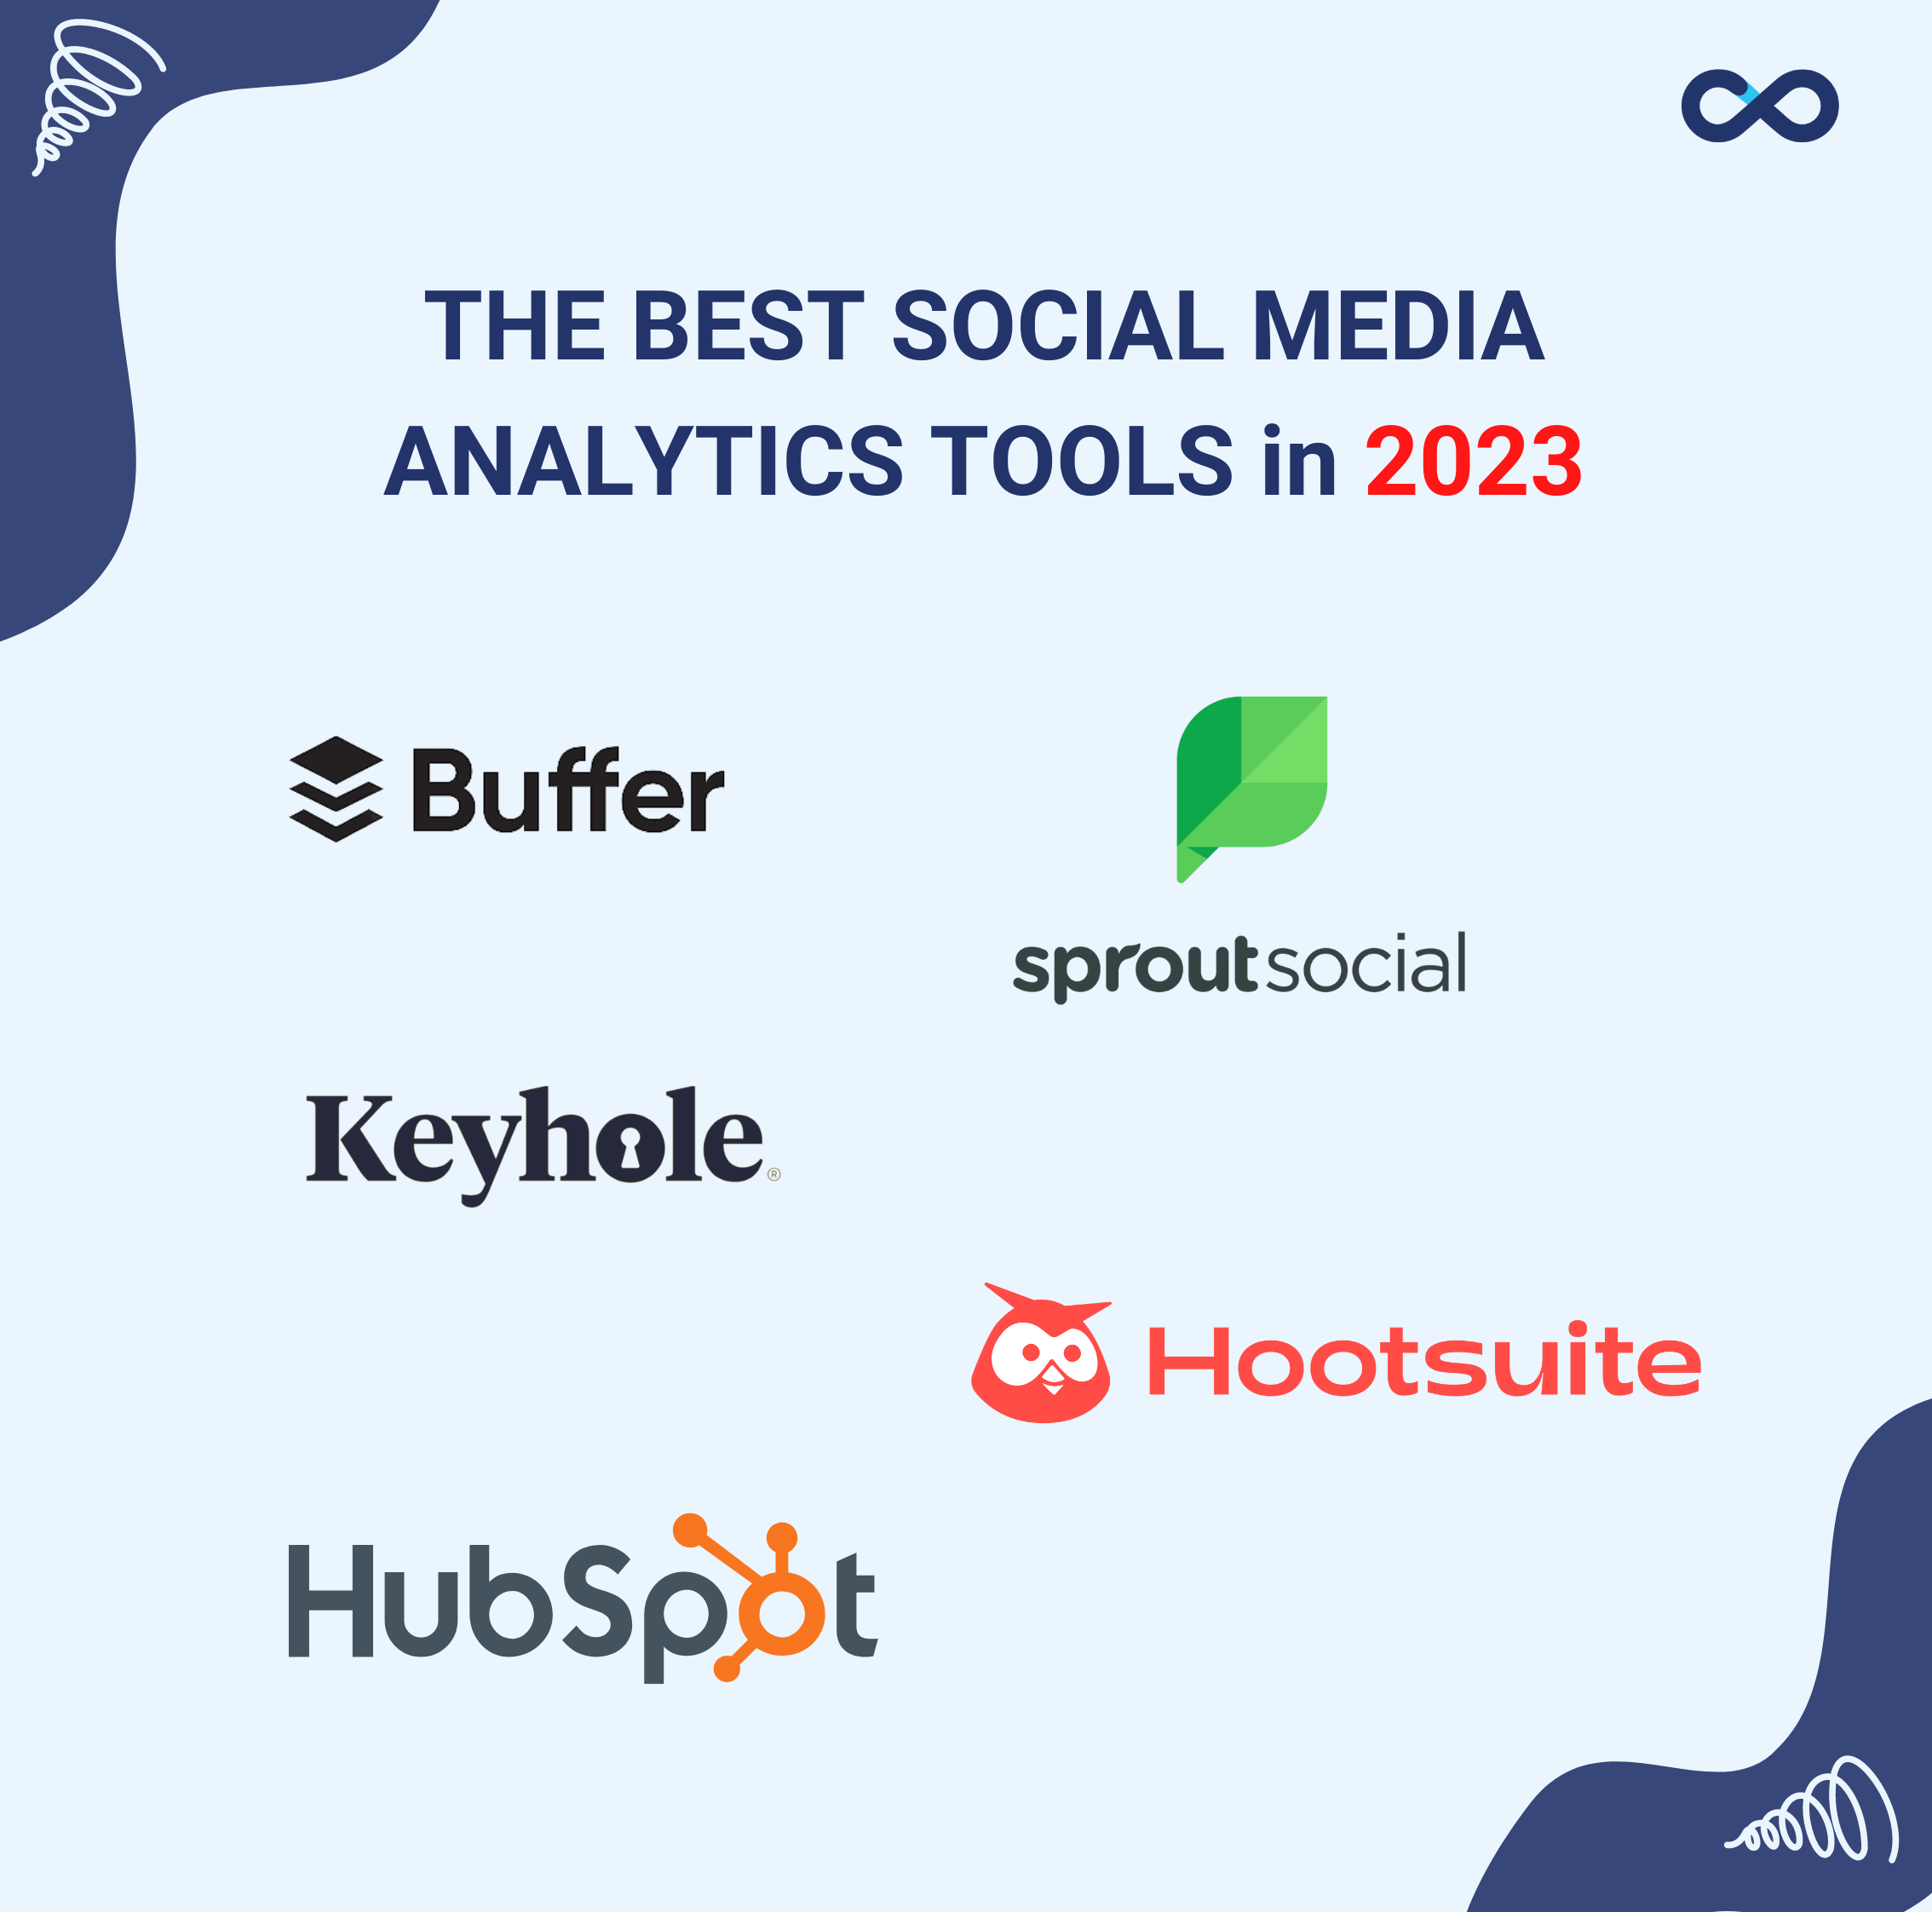 The best social media analytics tools in 2023